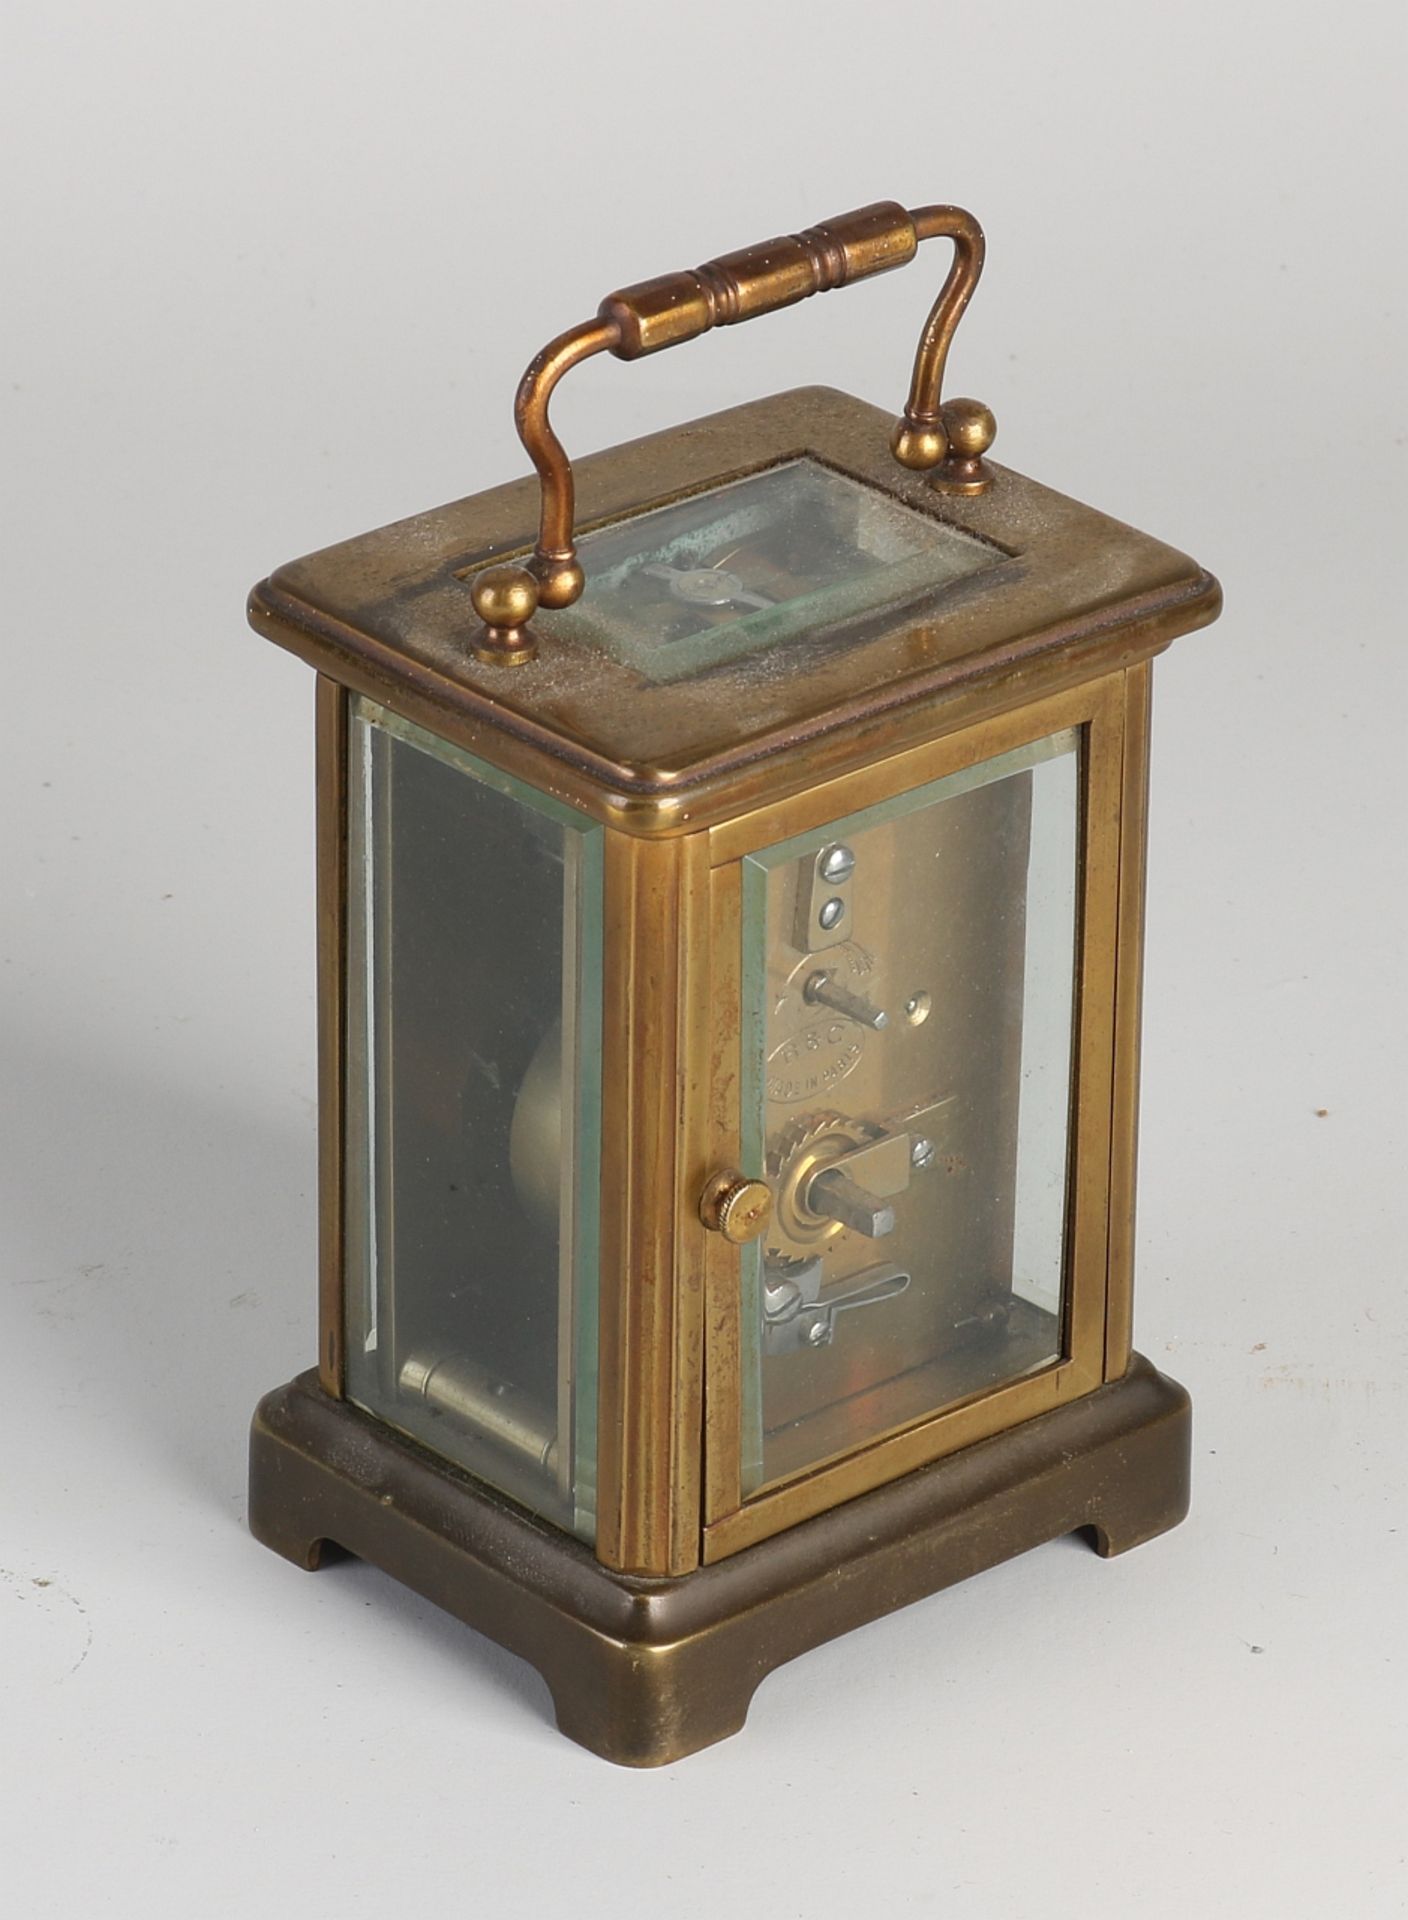 Antique French travel alarm clock - Image 2 of 2